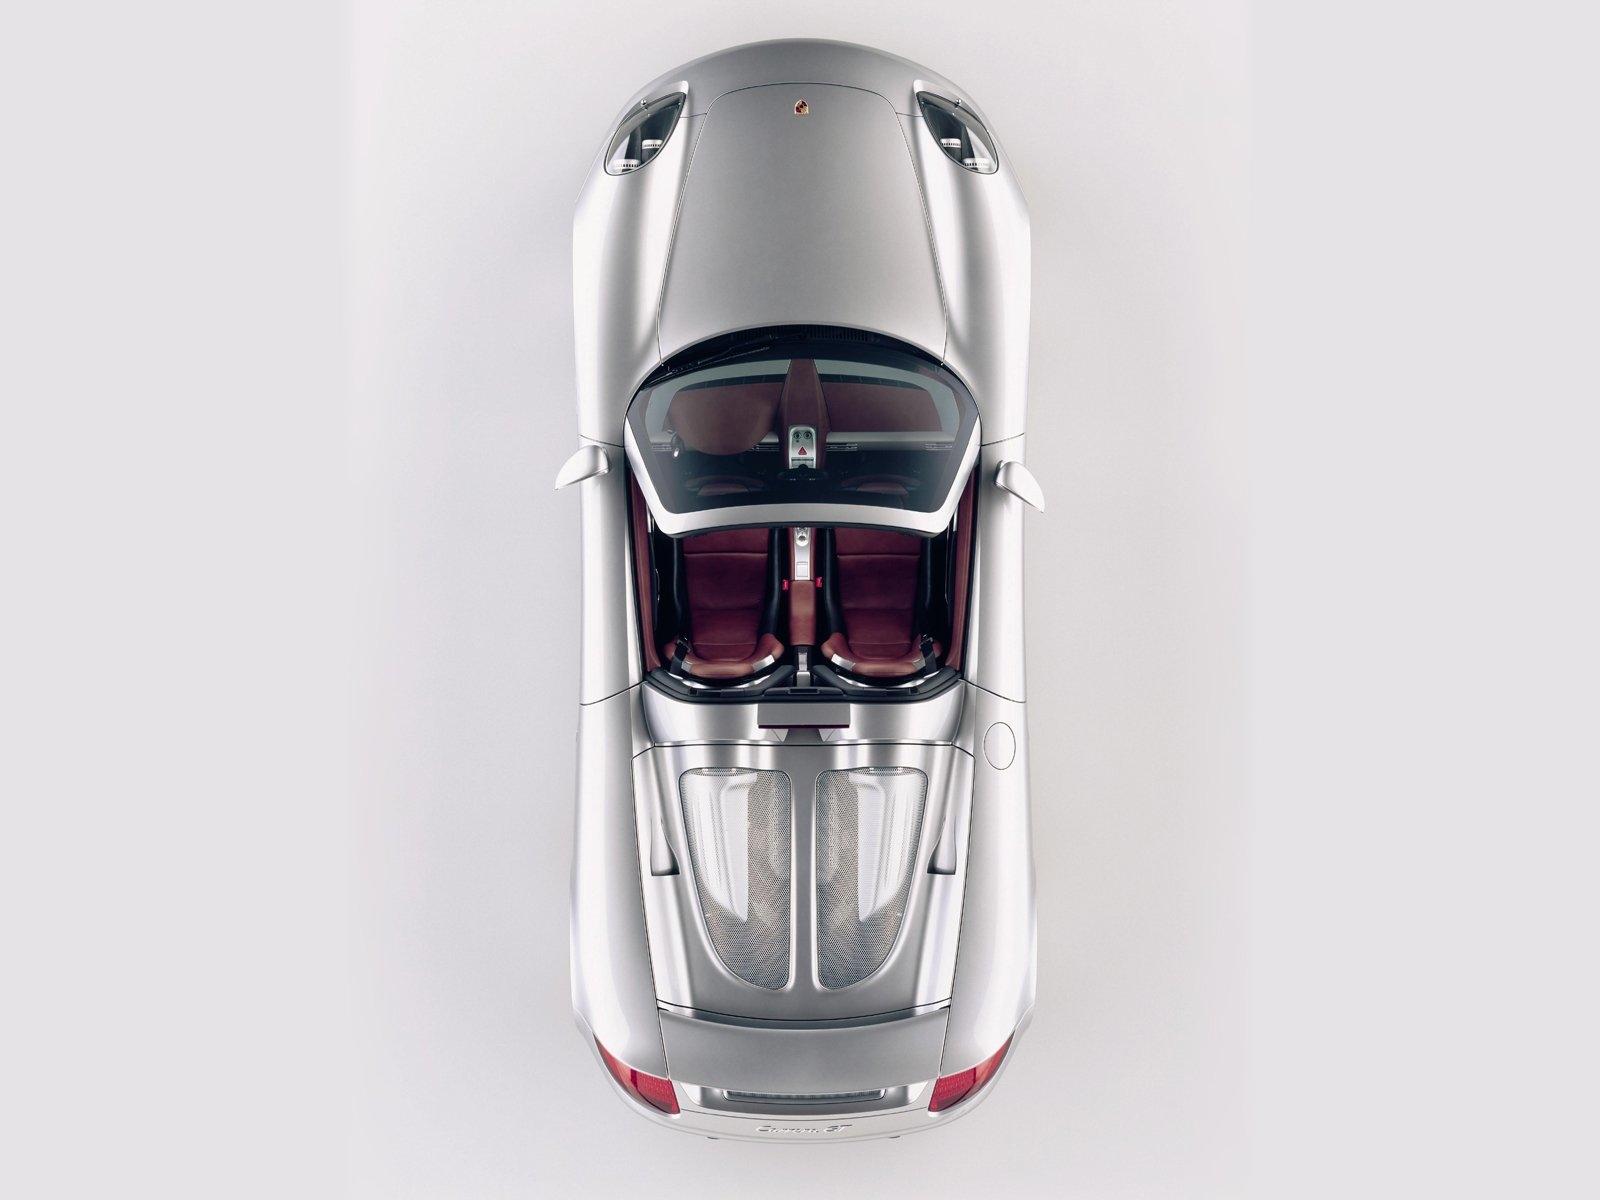 Porsche Carrera GT at 2048 x 2048 iPad size wallpapers HD quality